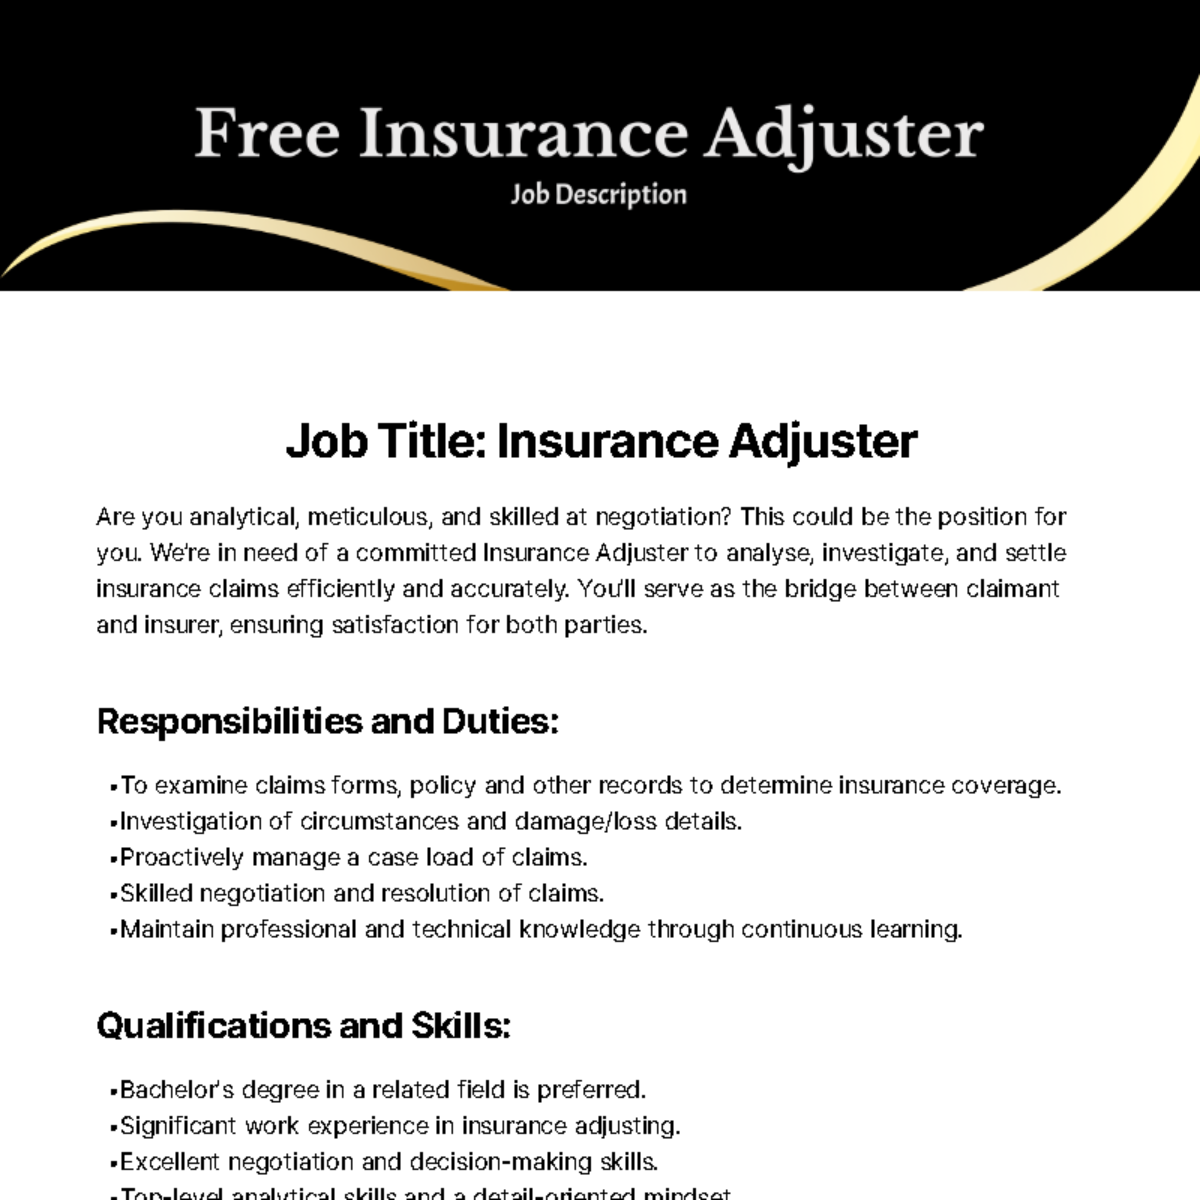 Free Insurance Adjuster Job Description Template